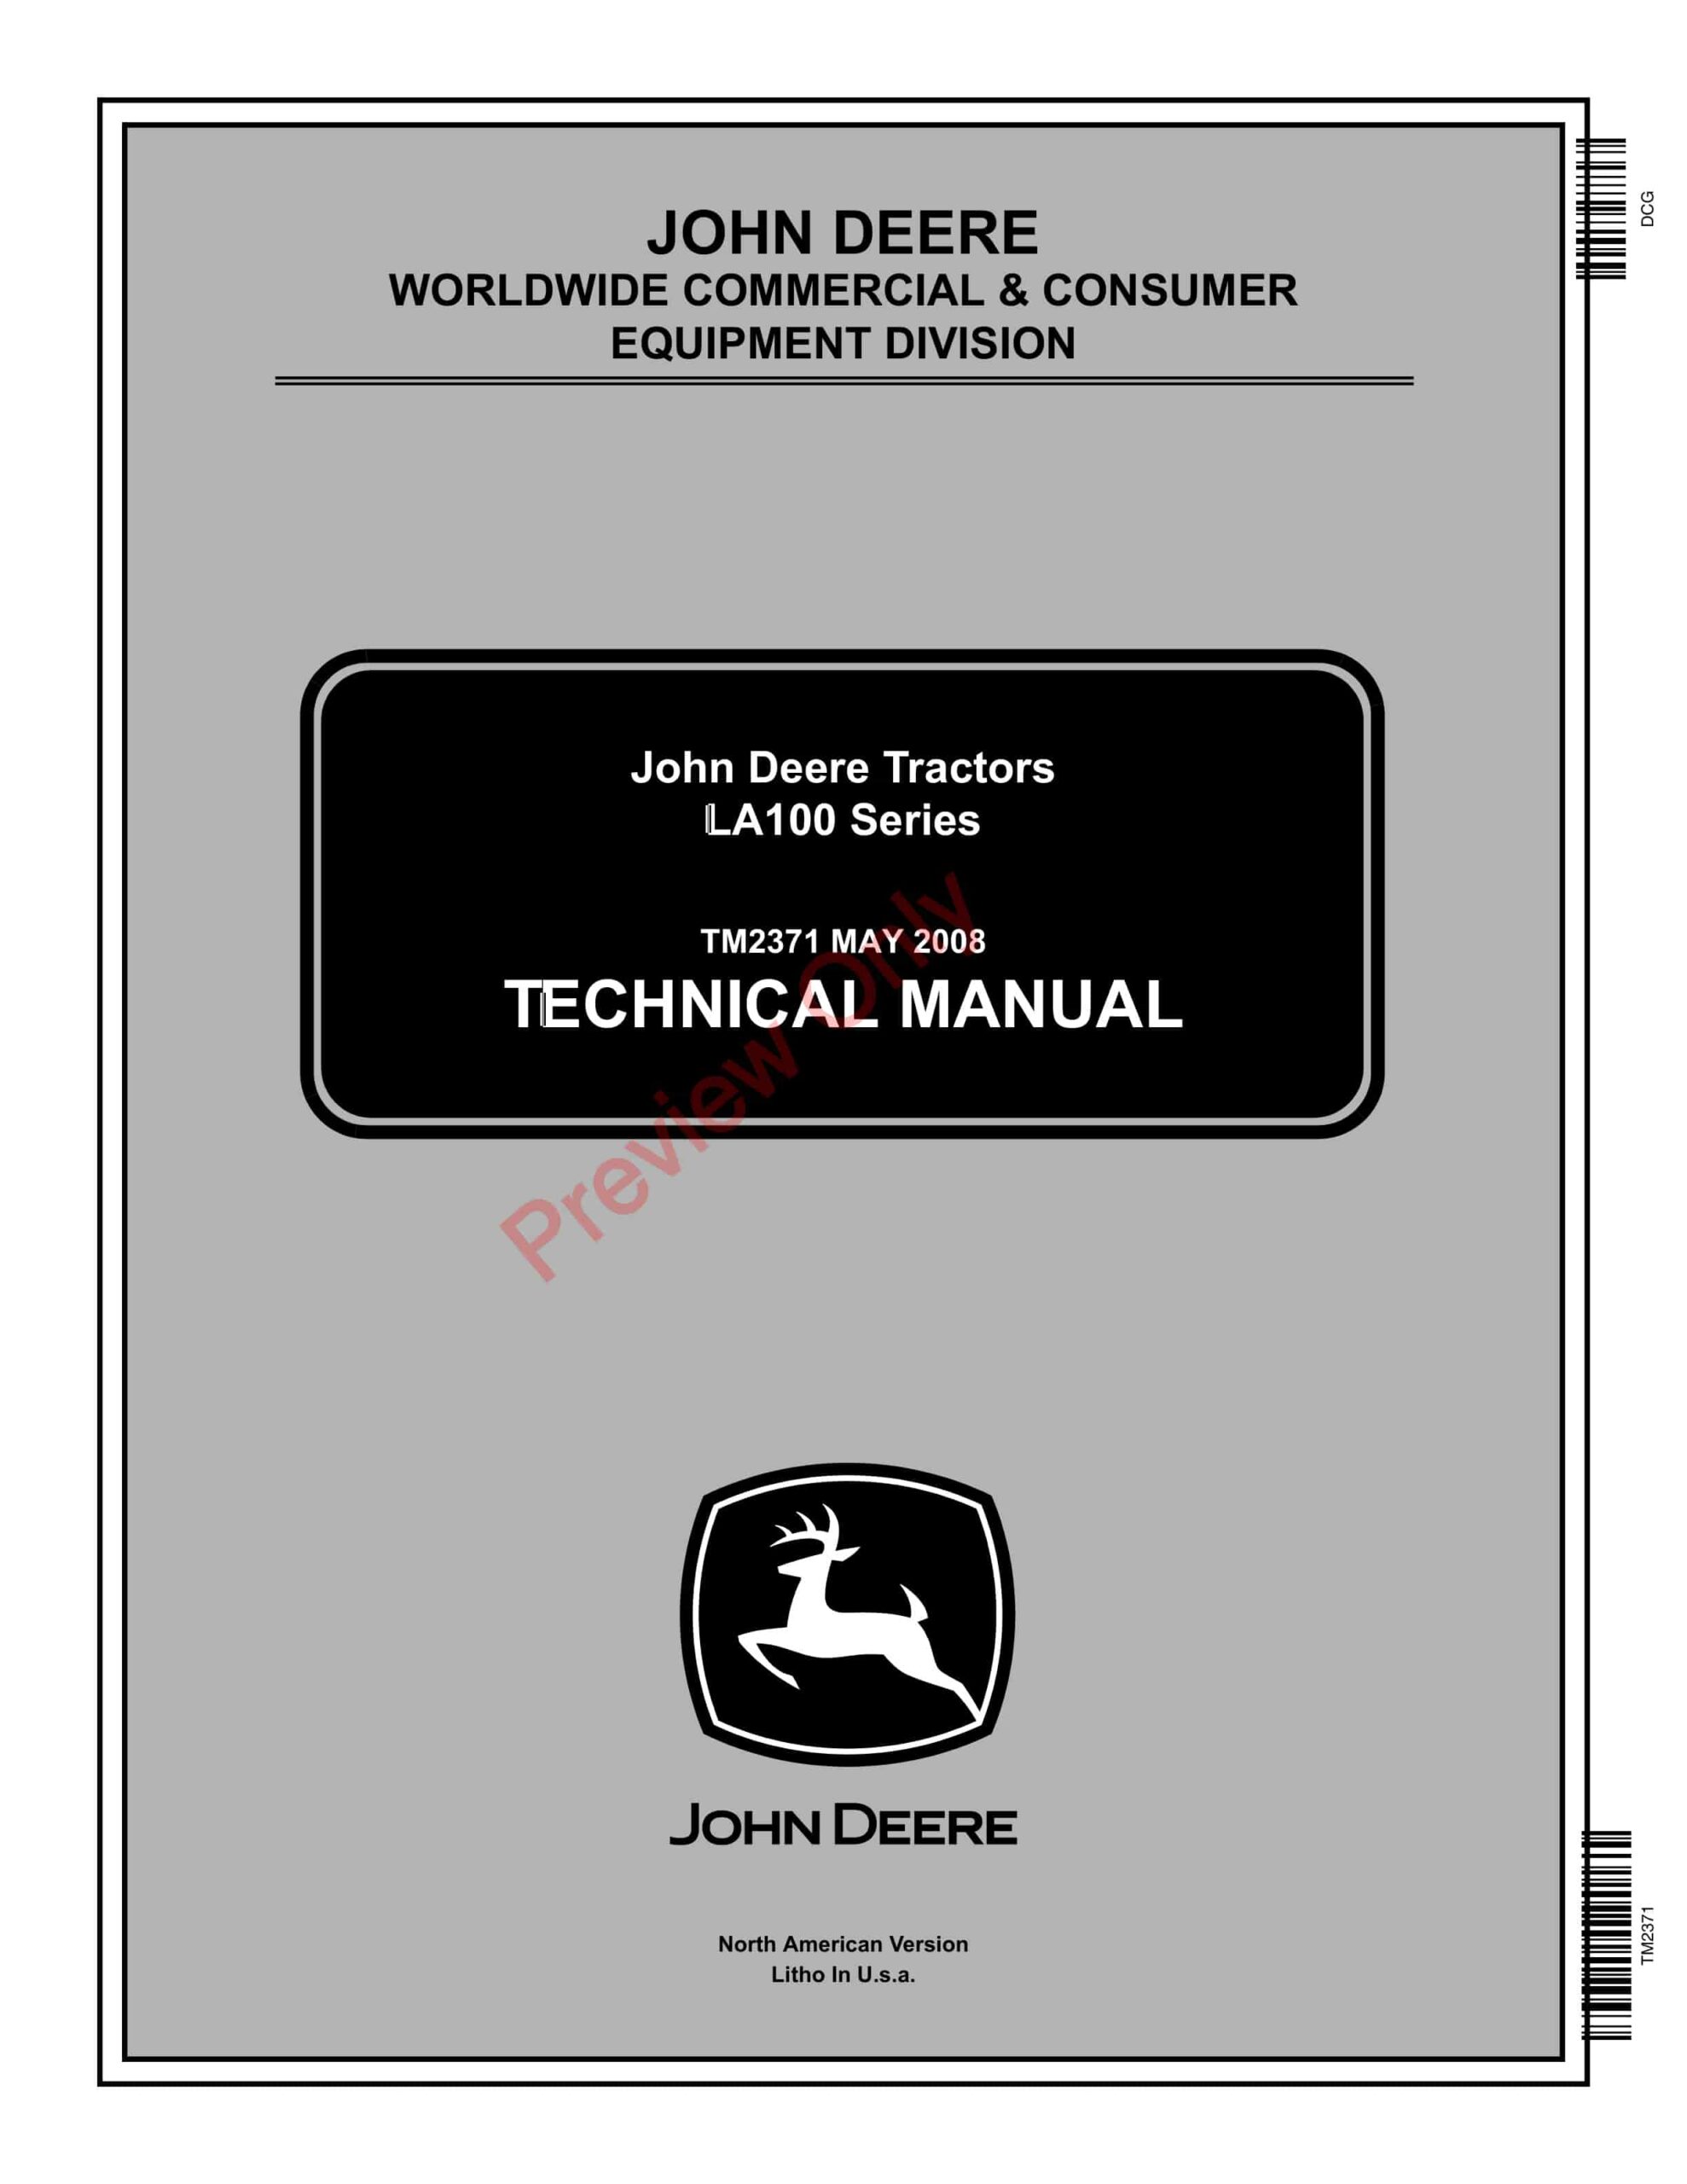 John Deere LA100 Series Tractor Technical Manual TM2371 01MAY08-1